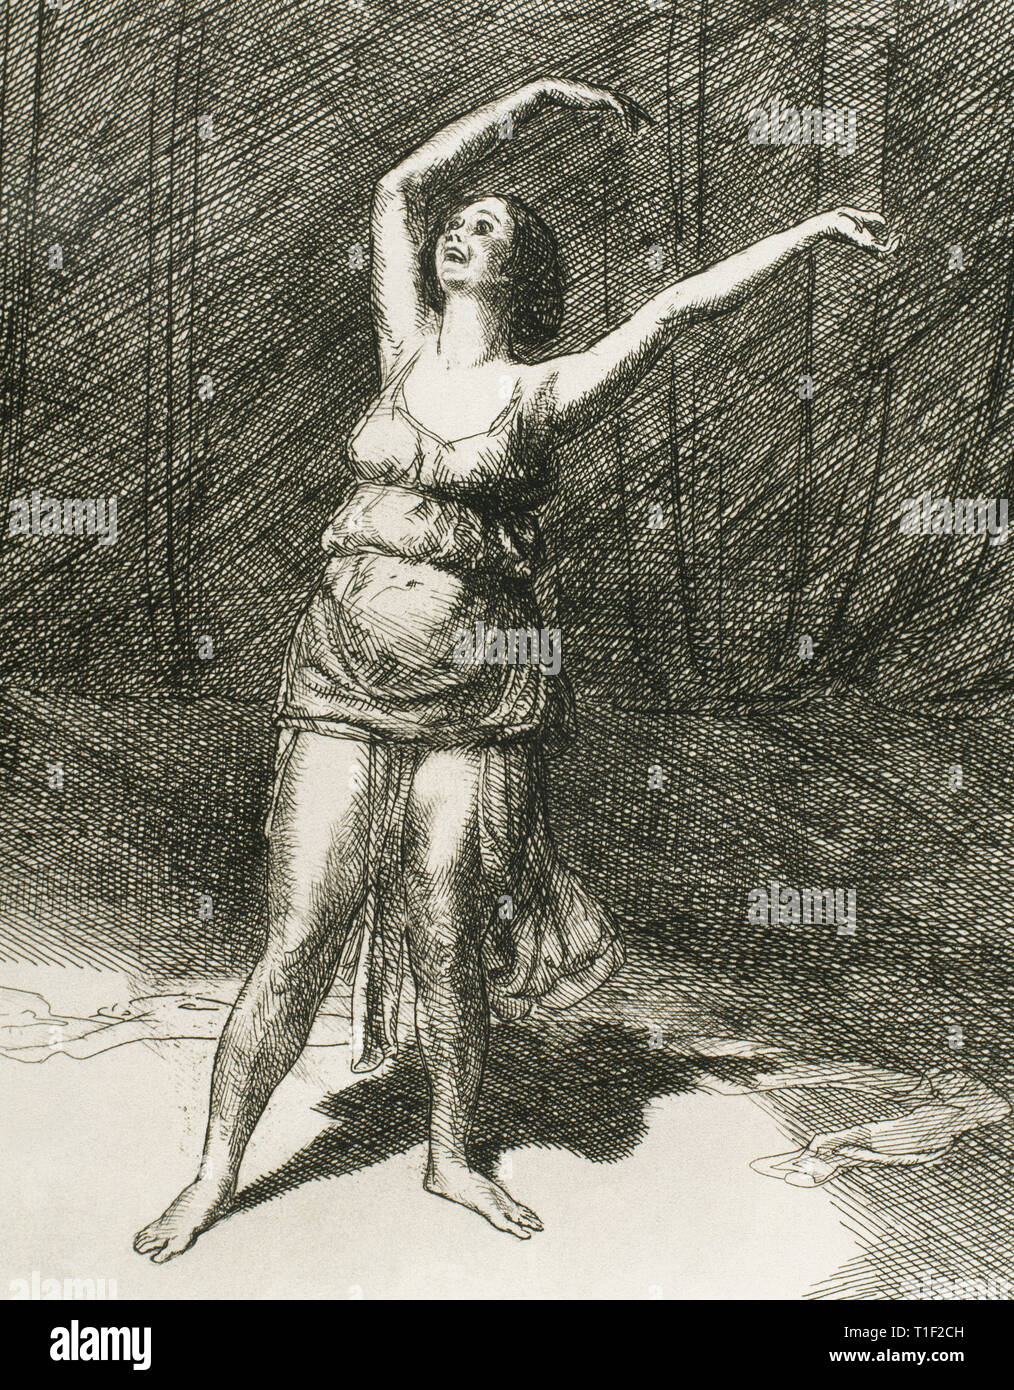 Isadora Duncan Isadora Duncan (Angela) (1877-1927). Danseuse américaine. Isadora Duncan danse. Gravure par John Sloan (1871-1951), 1915. Banque D'Images